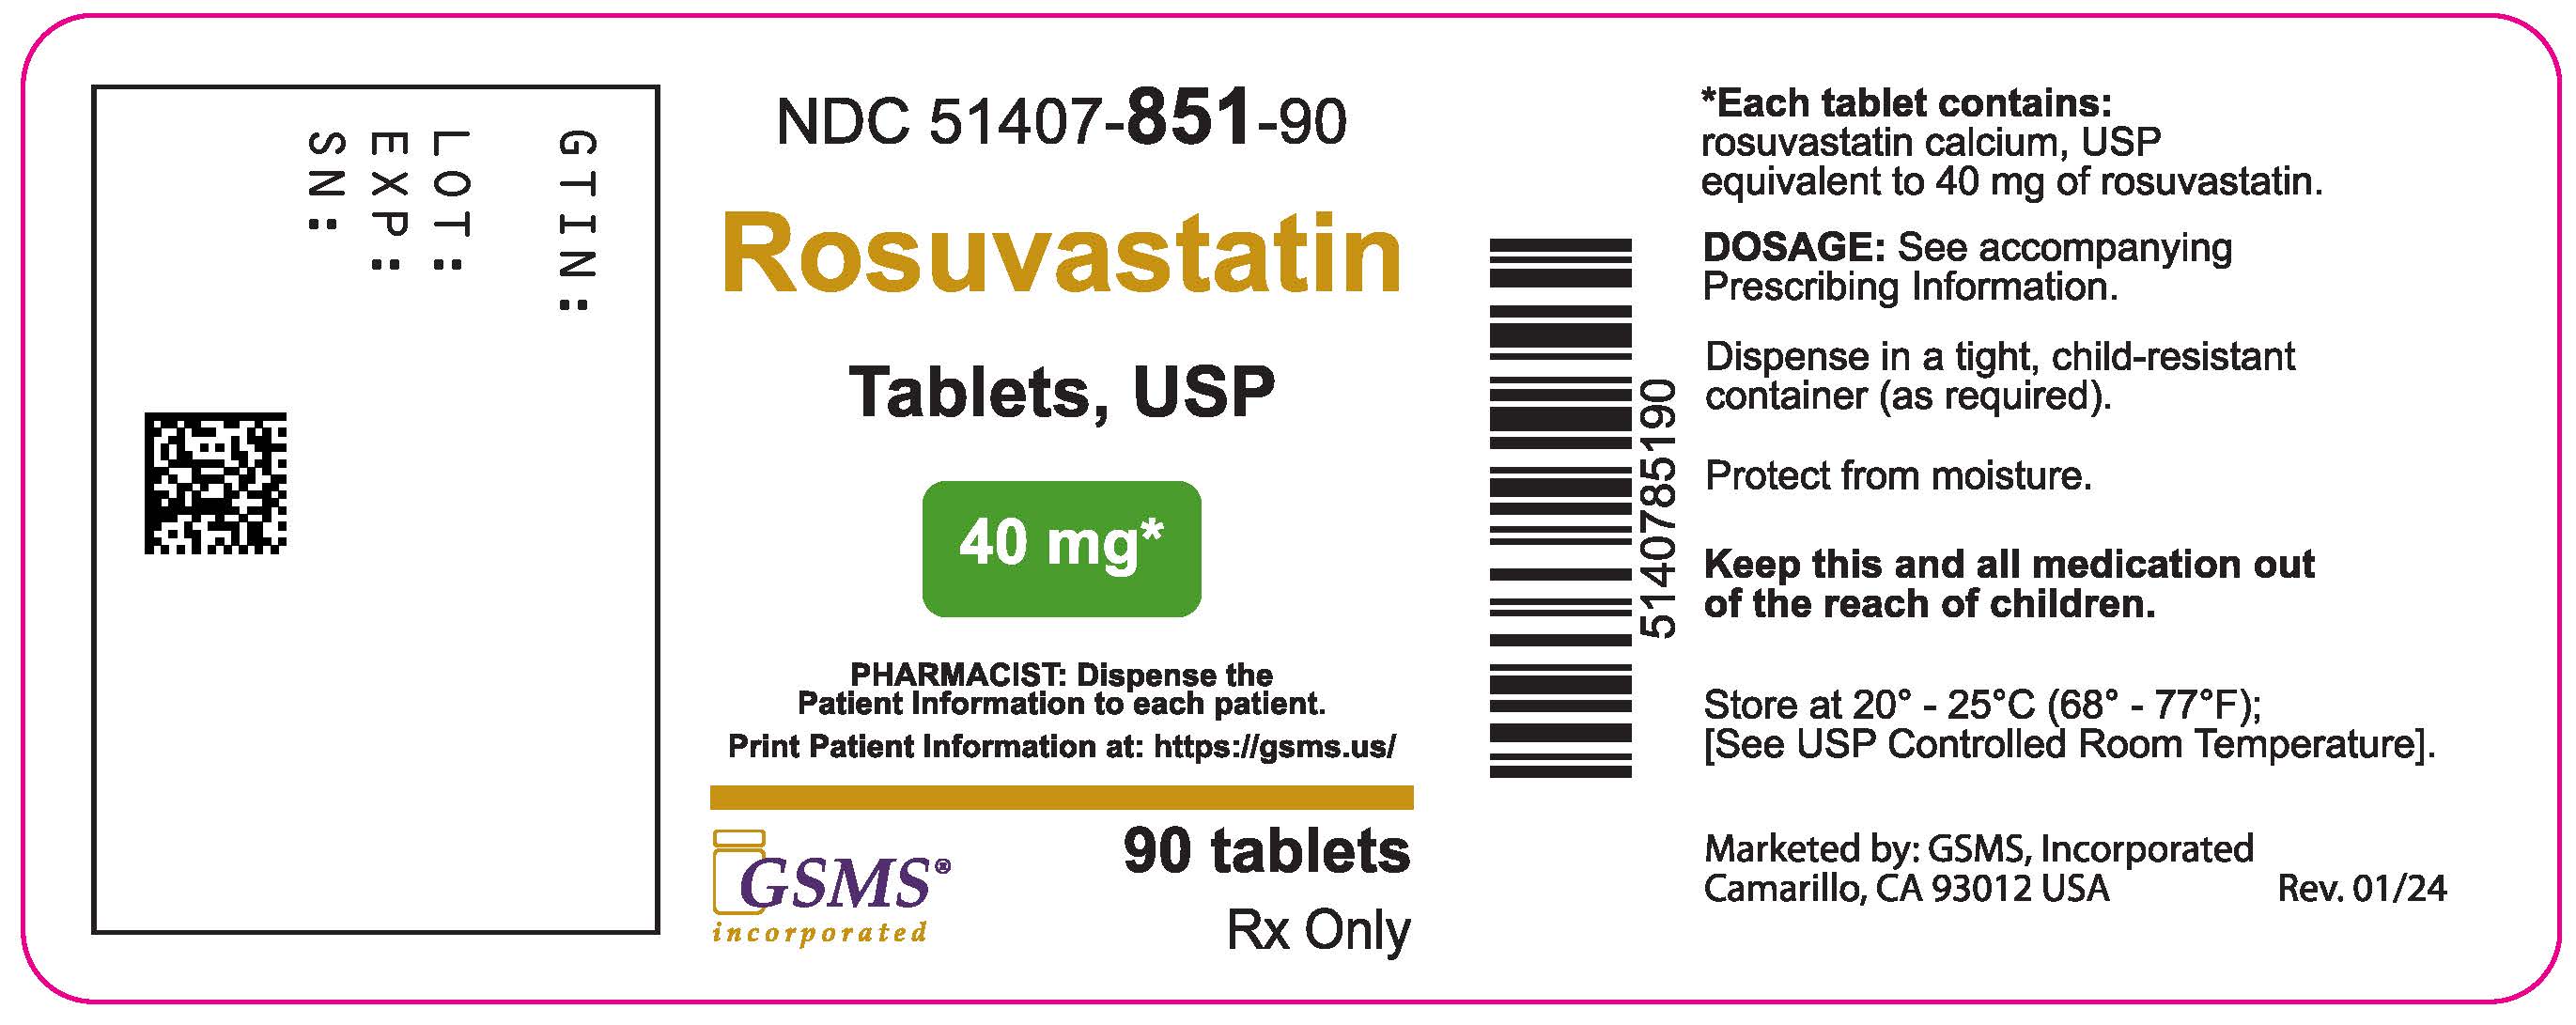 51407-851-90LB - Rosuvastatin - Rev. 0124.jpg